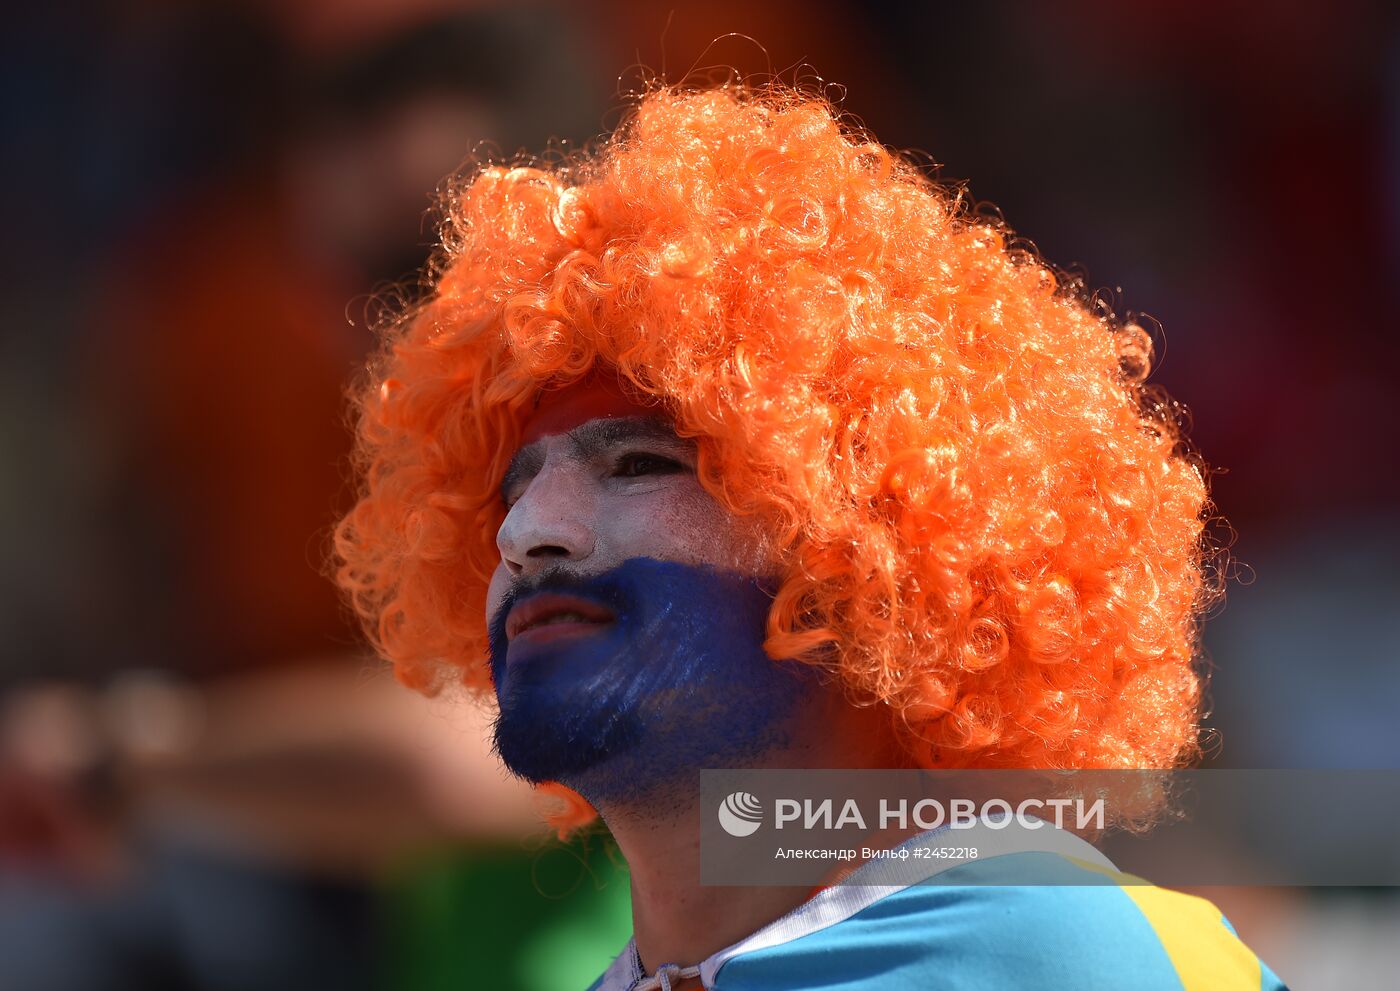 Футбол. Чемпионат мира - 2014. Матч Нидерланды - Чили